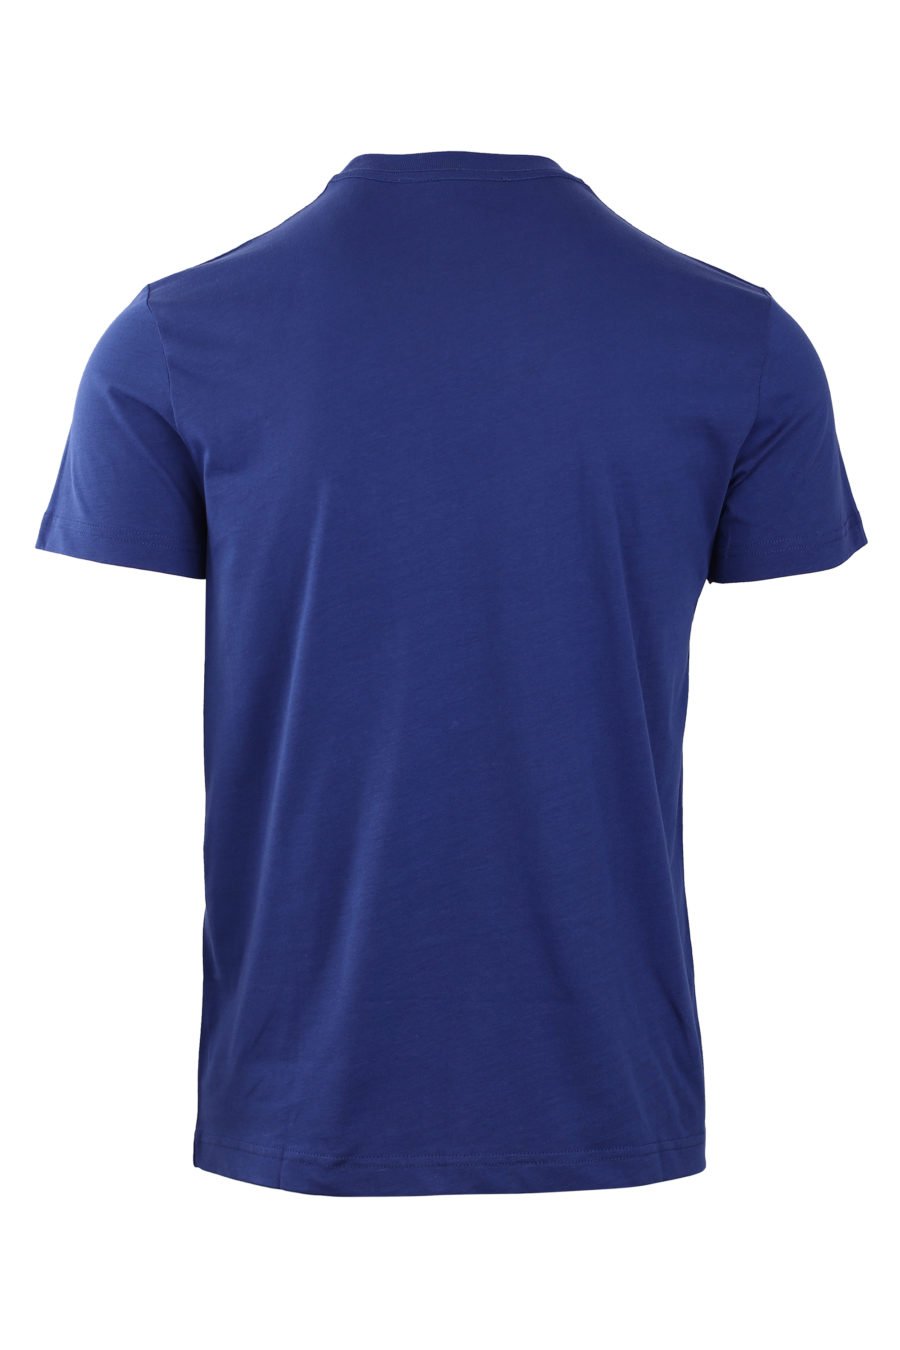 T-shirt bleu marine avec petit logo rond - IMG 0773